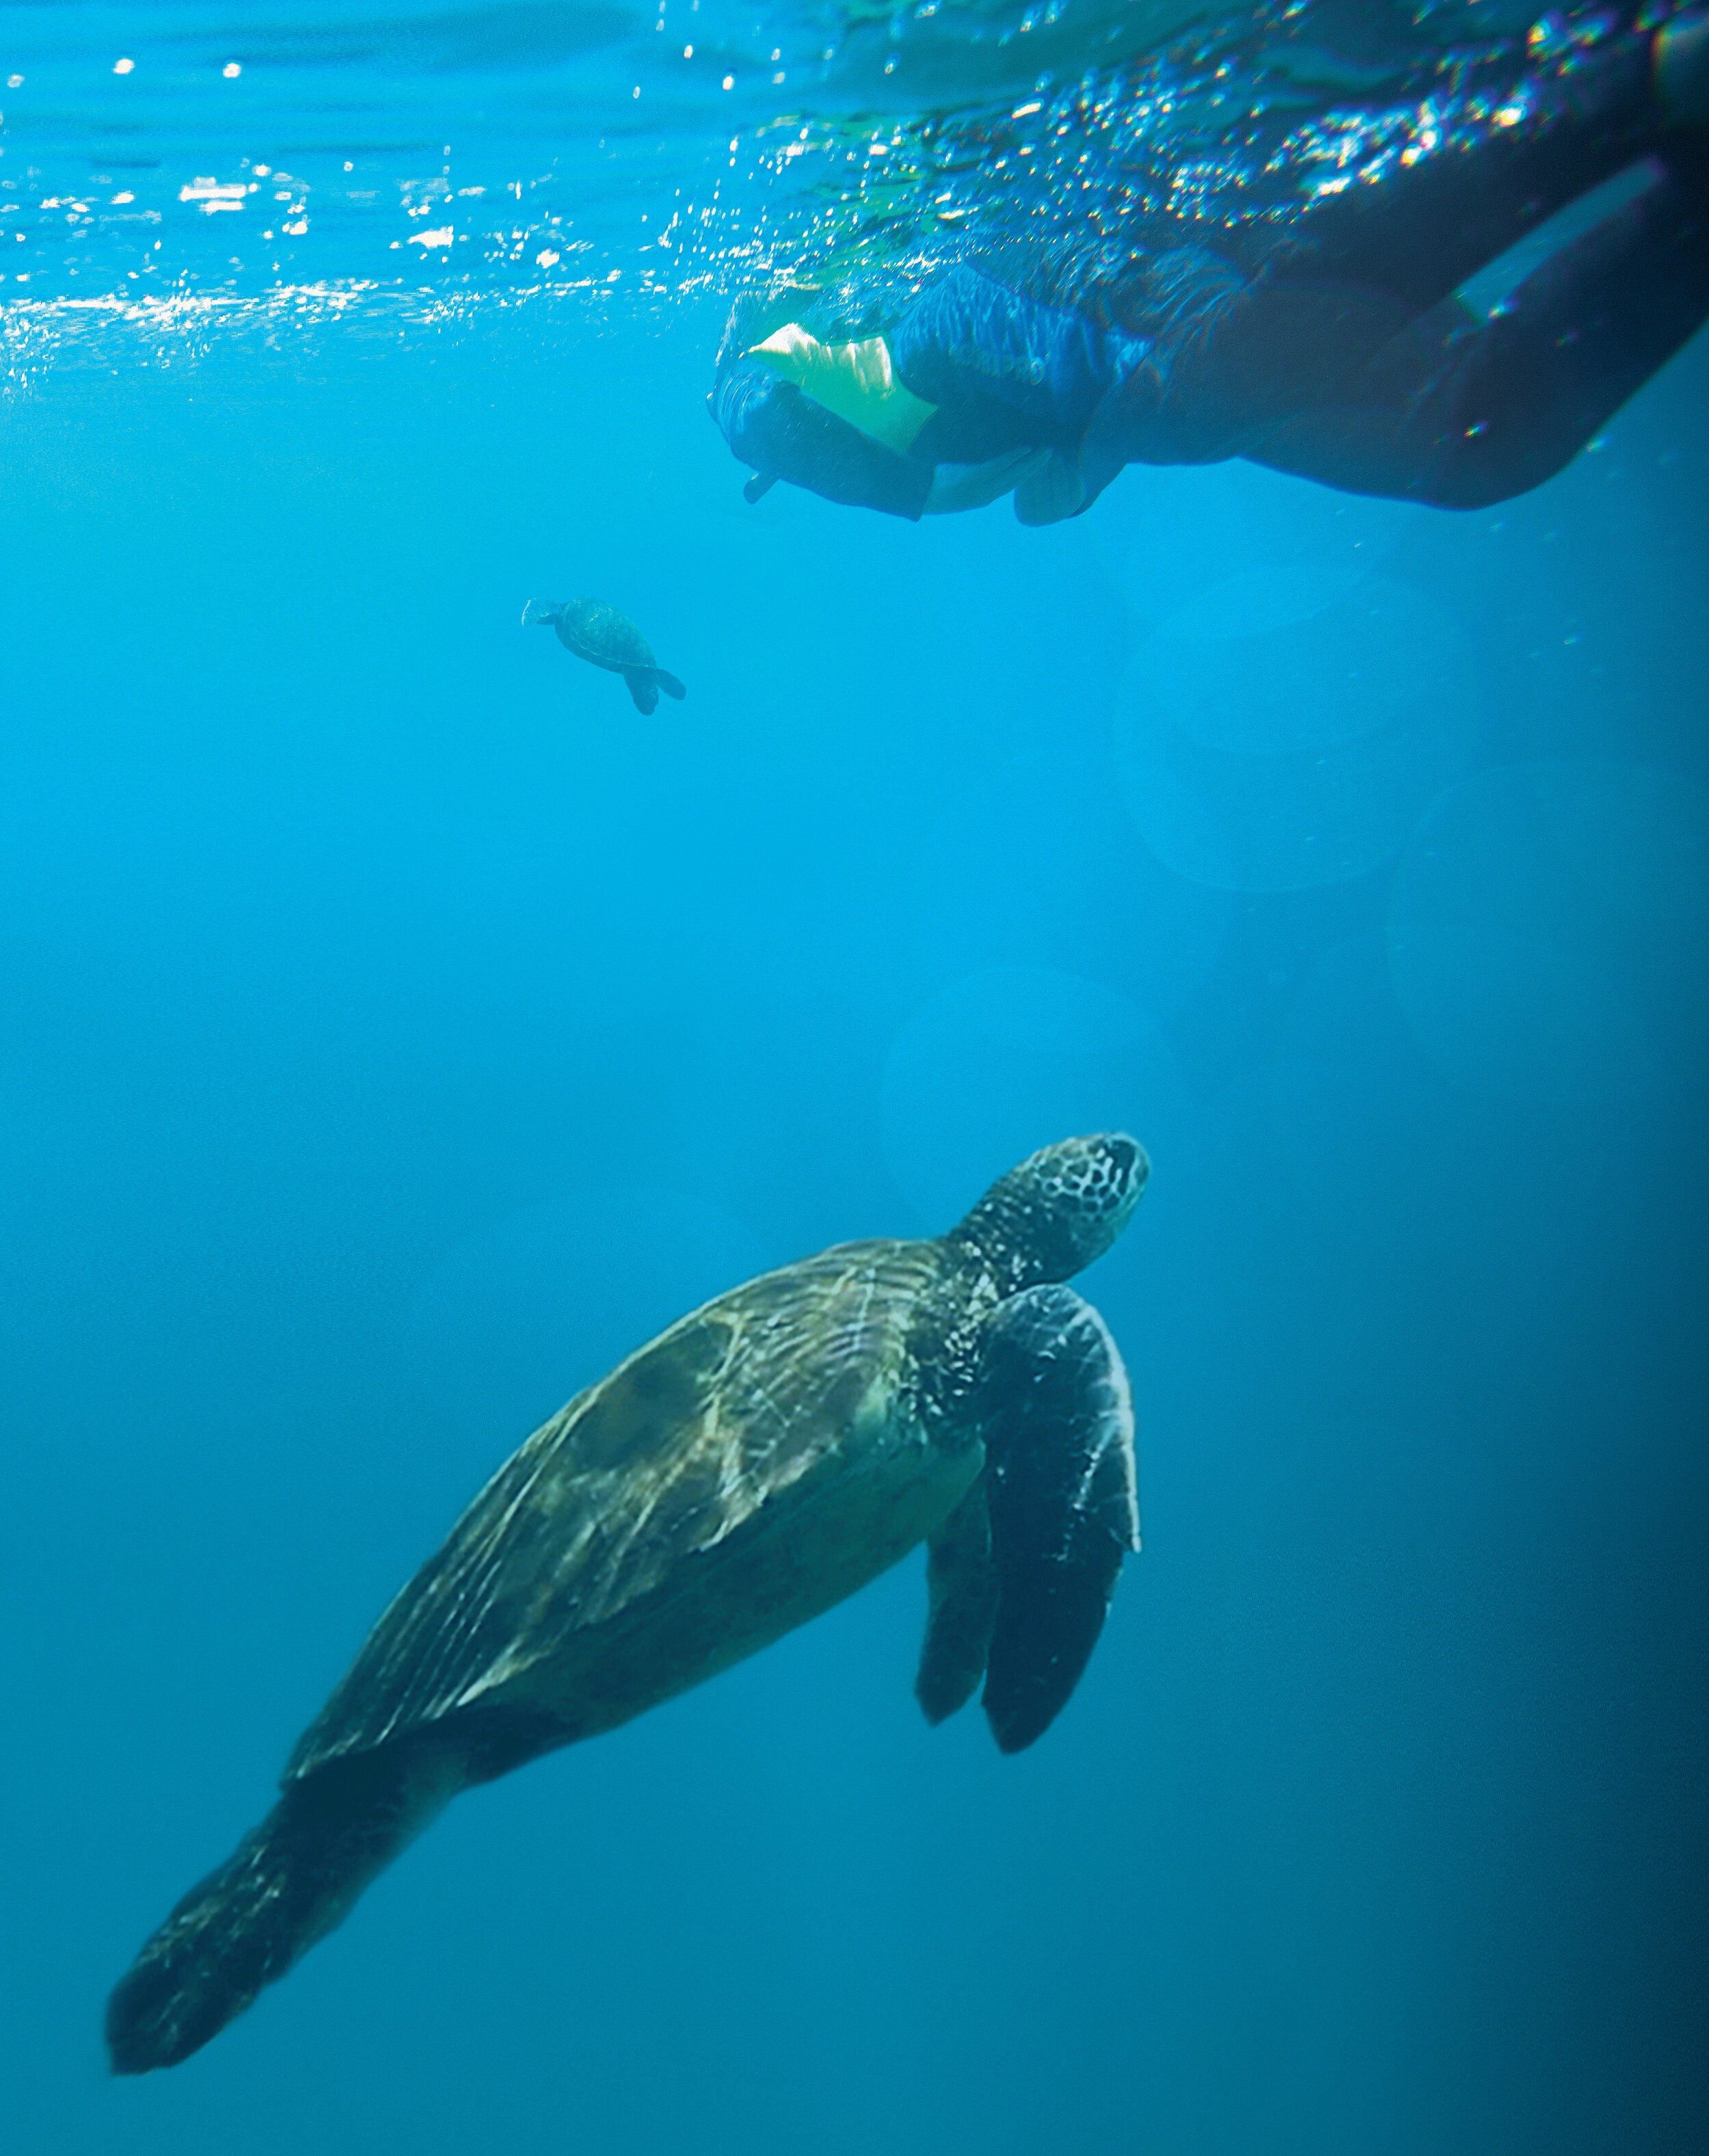 Ecuador Galapagos Snorkelling Traveller Turtle-Attit Patel 2010-1004 Composite Lg RGB.jpg